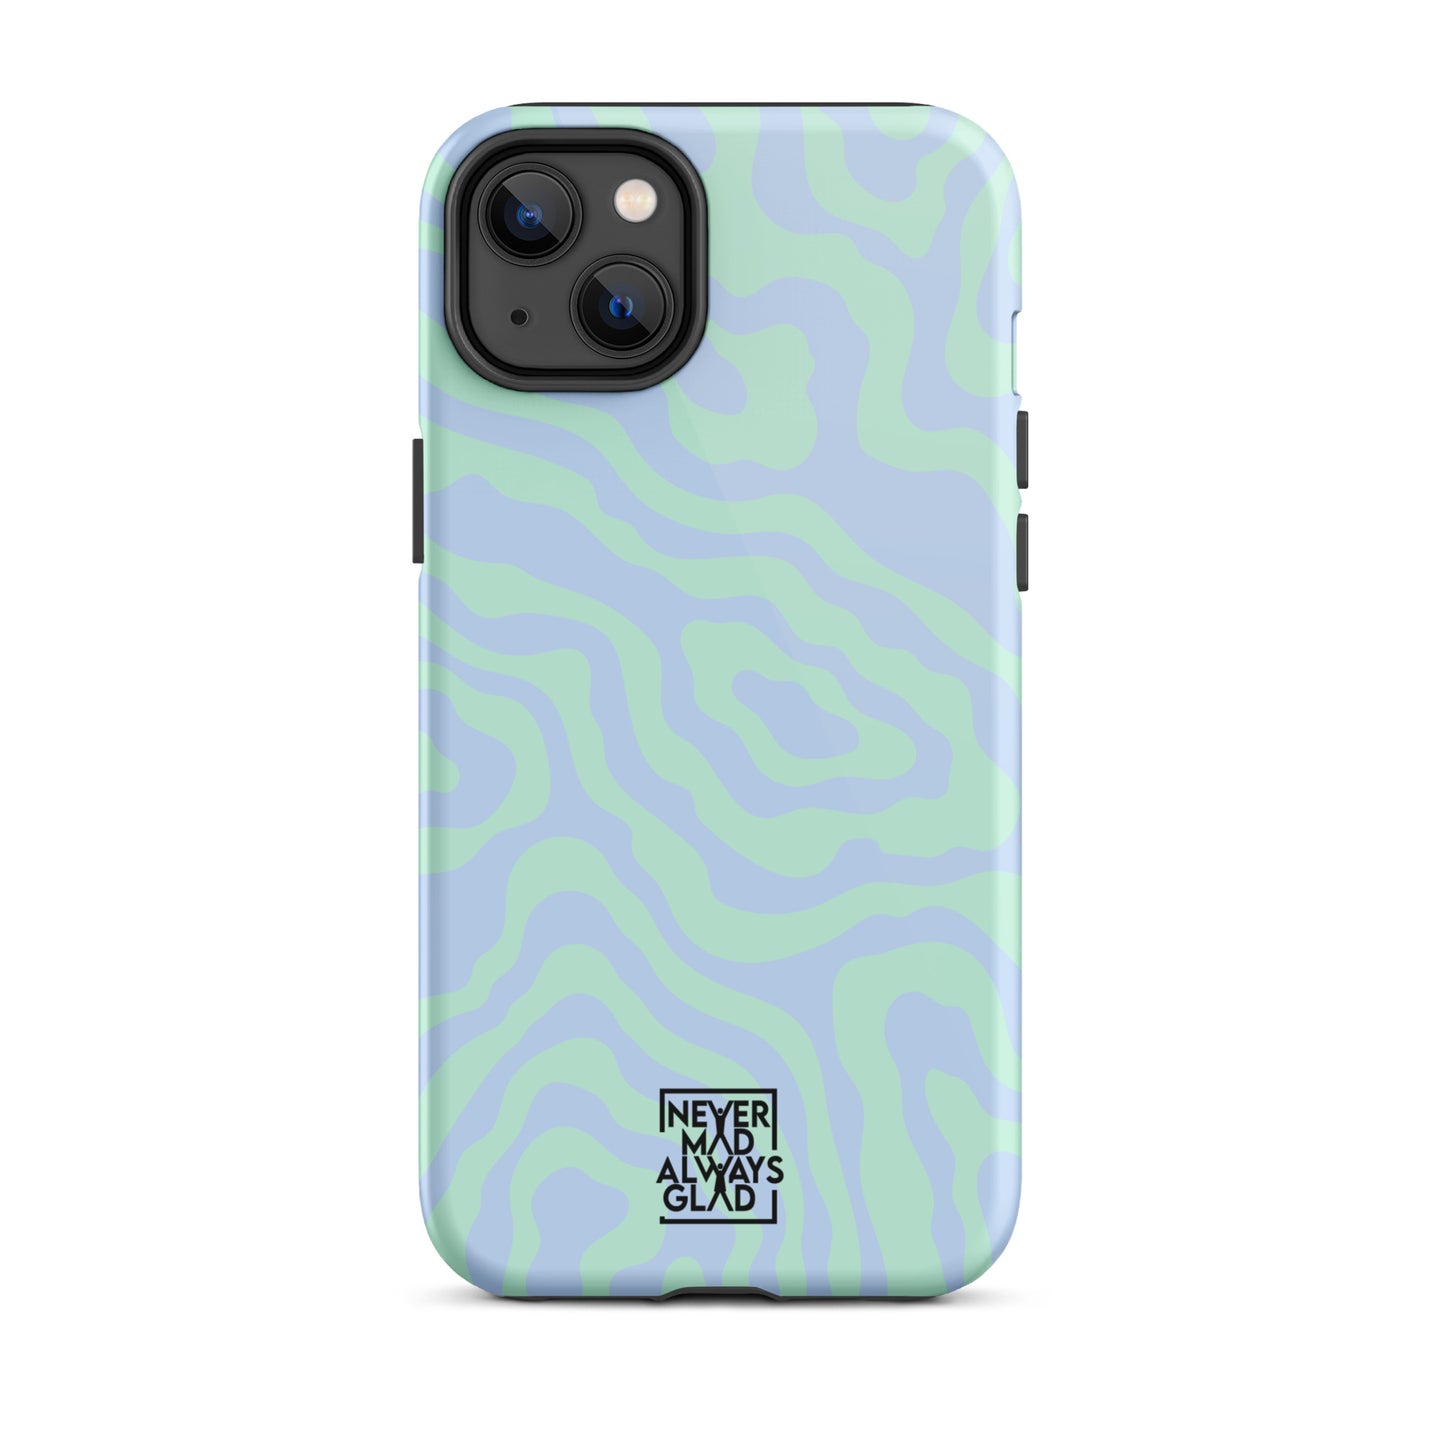 NMAG Green/Blue Dream Tough iPhone case